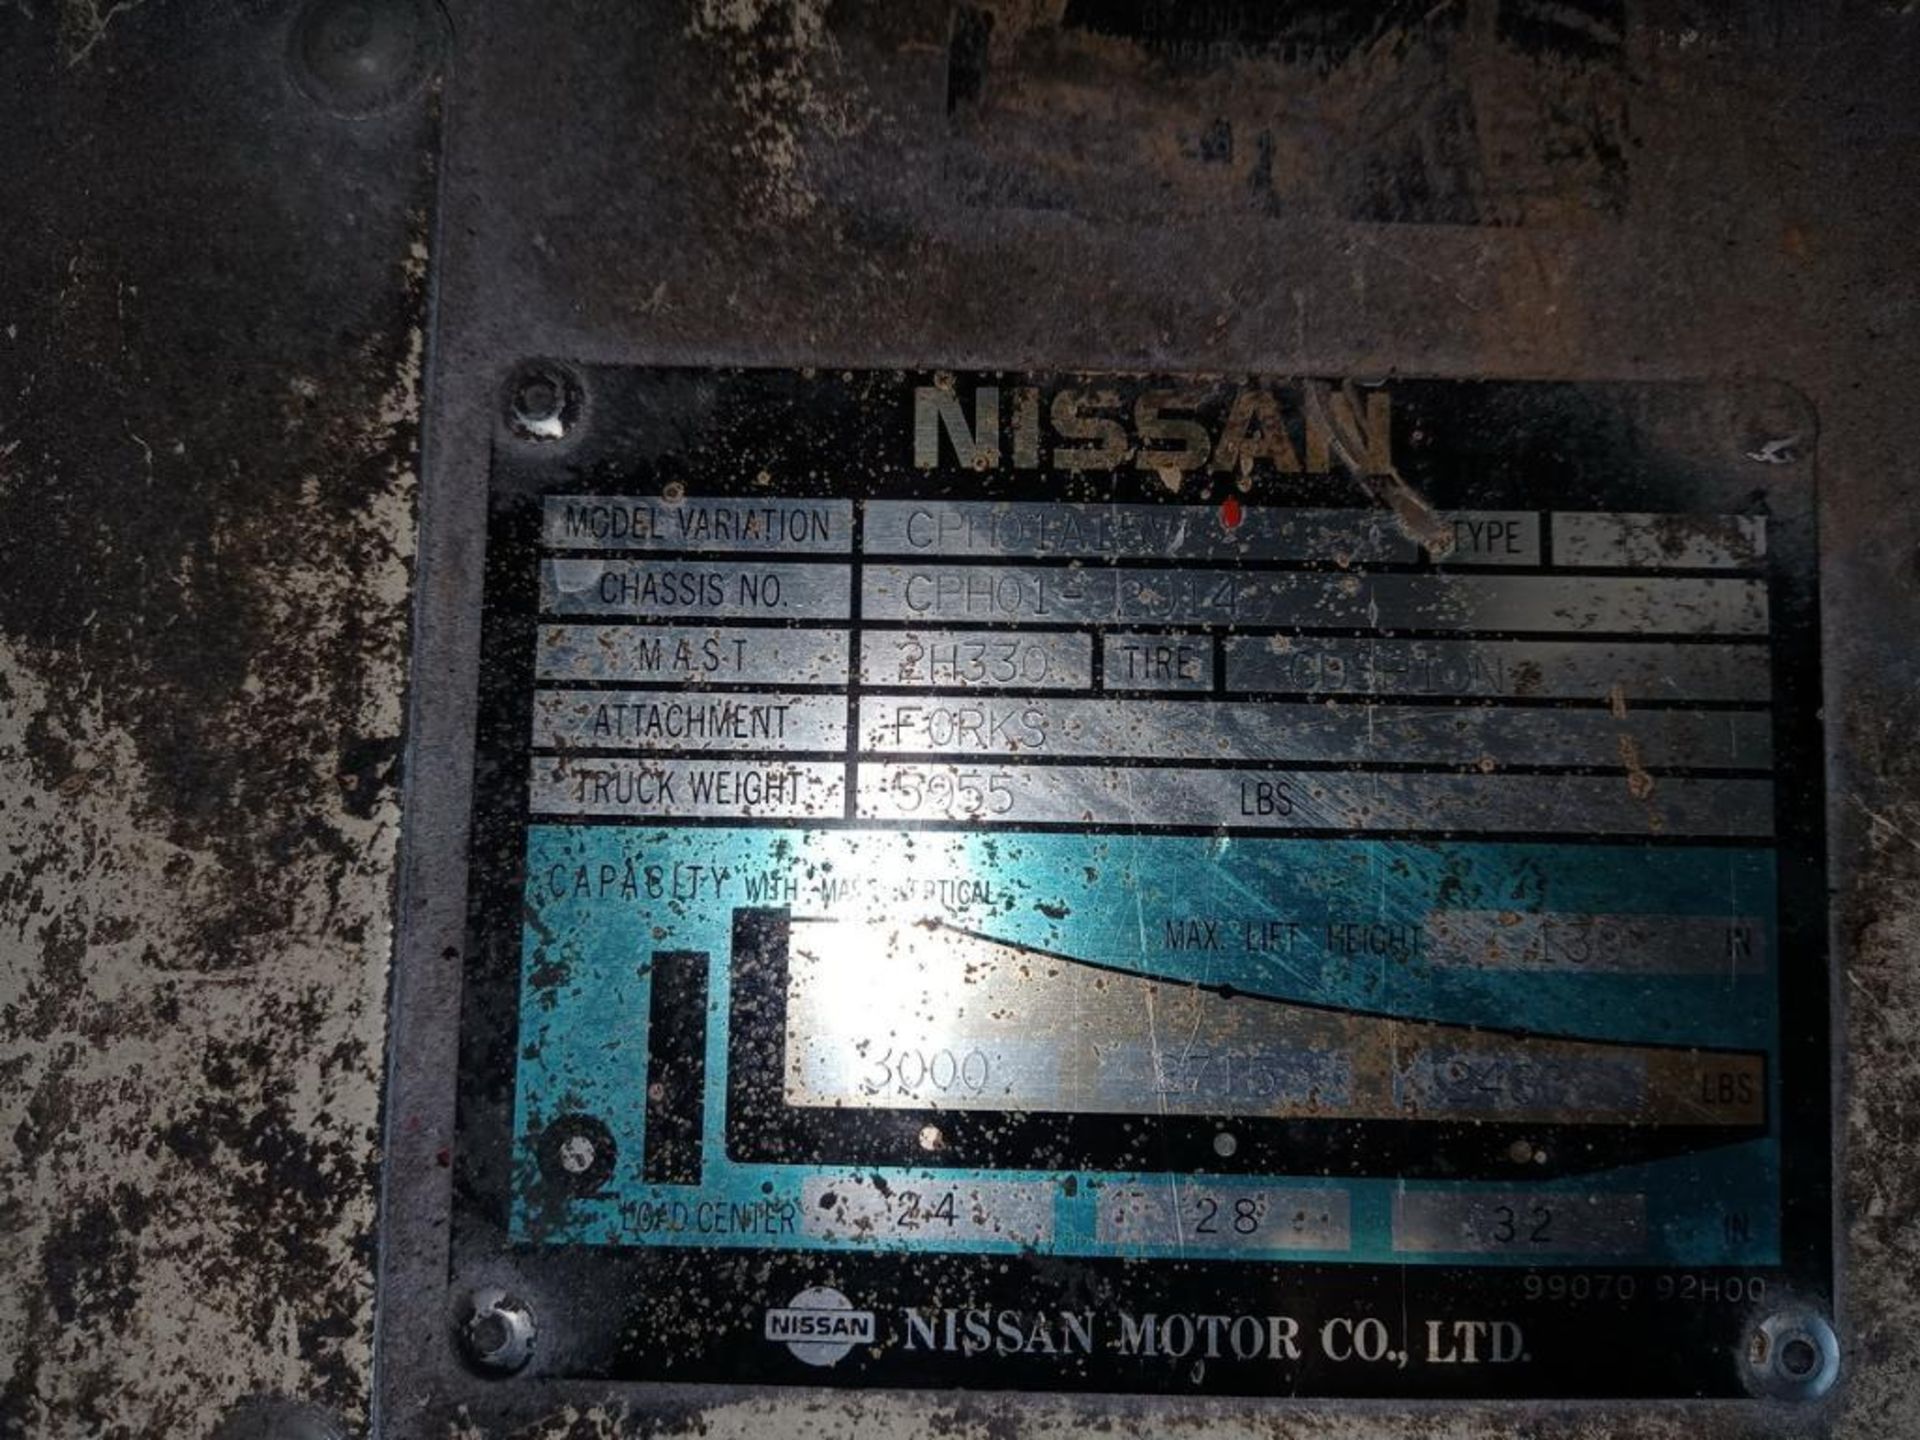 Nissan Mdl. CPH01A15V Propane Forklift - Image 8 of 8